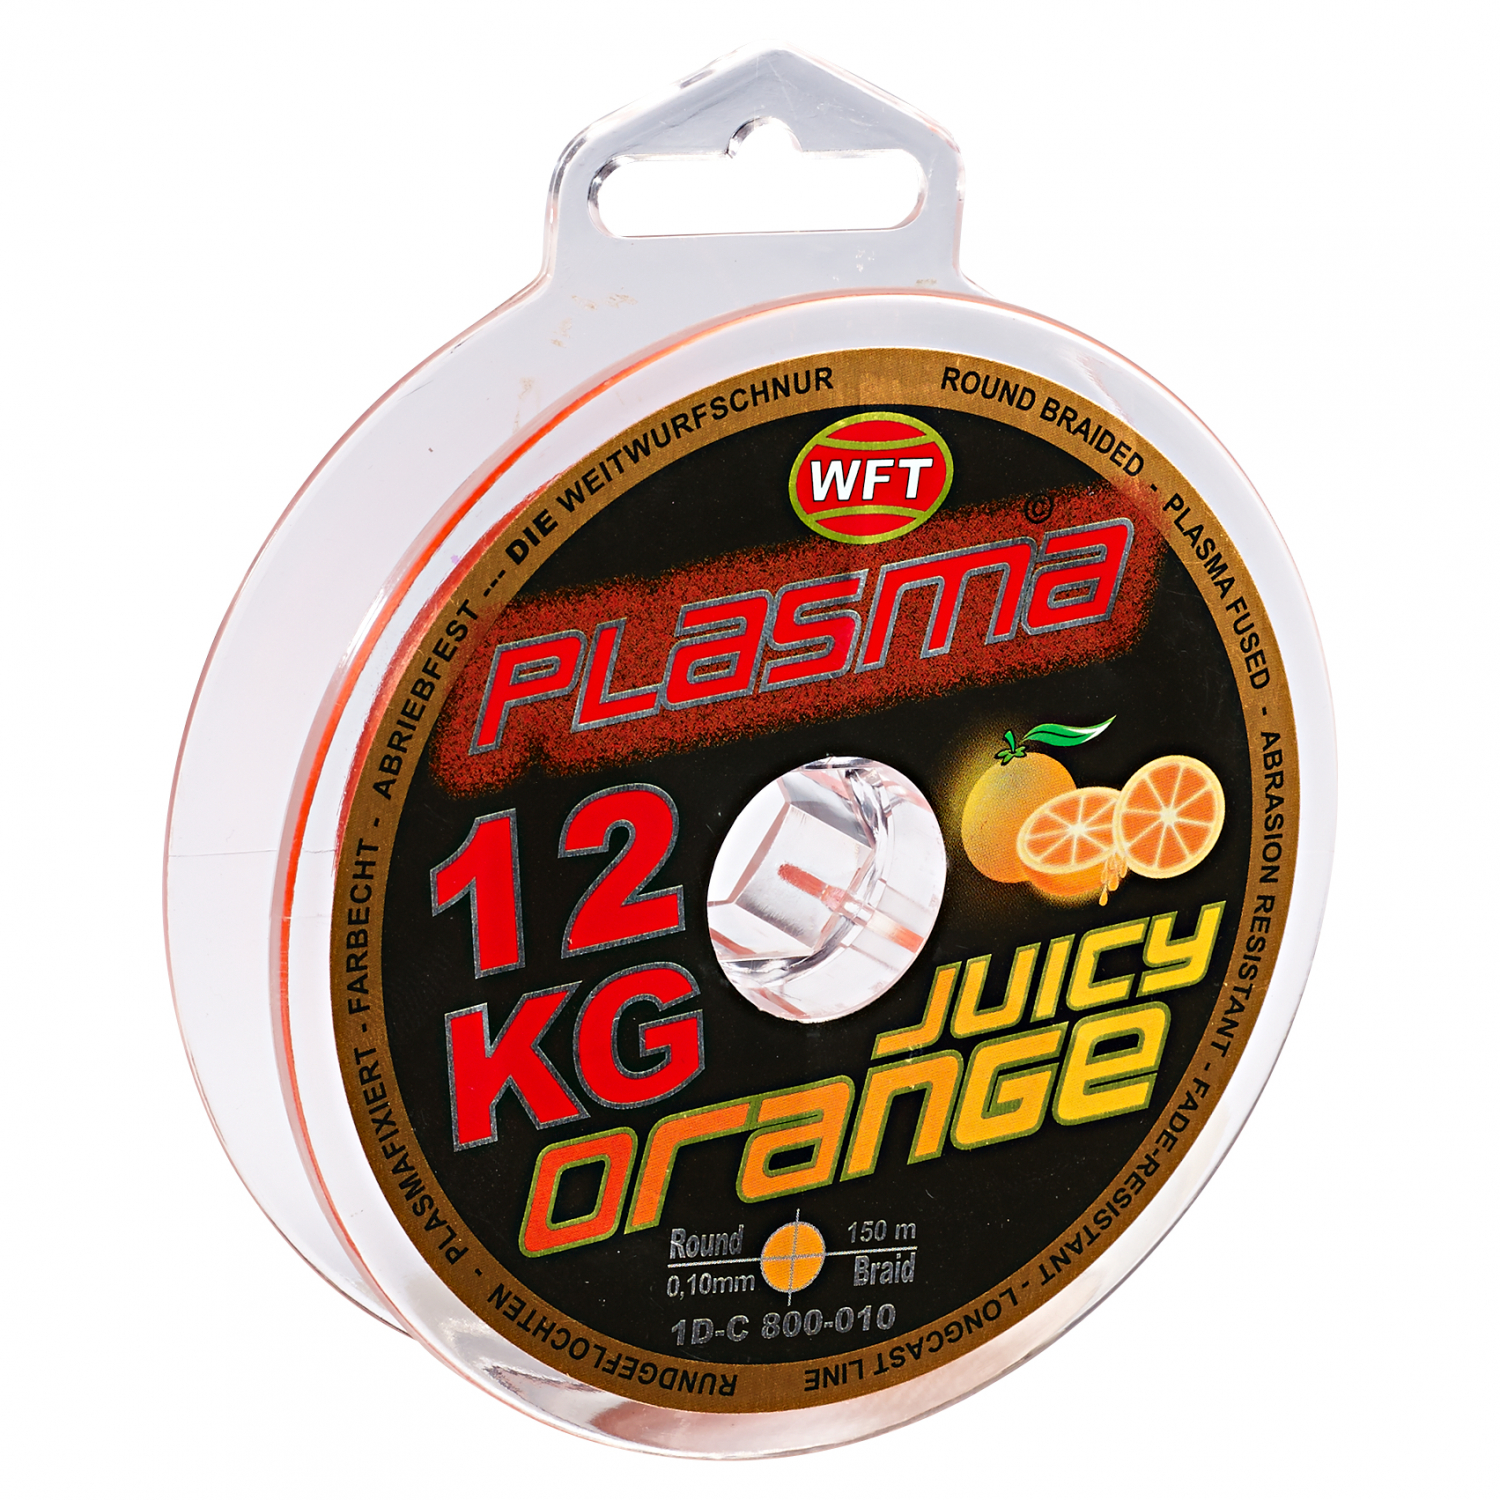 WFT Fishing Line Plasma Round Braid (Juicy Orange) at low prices